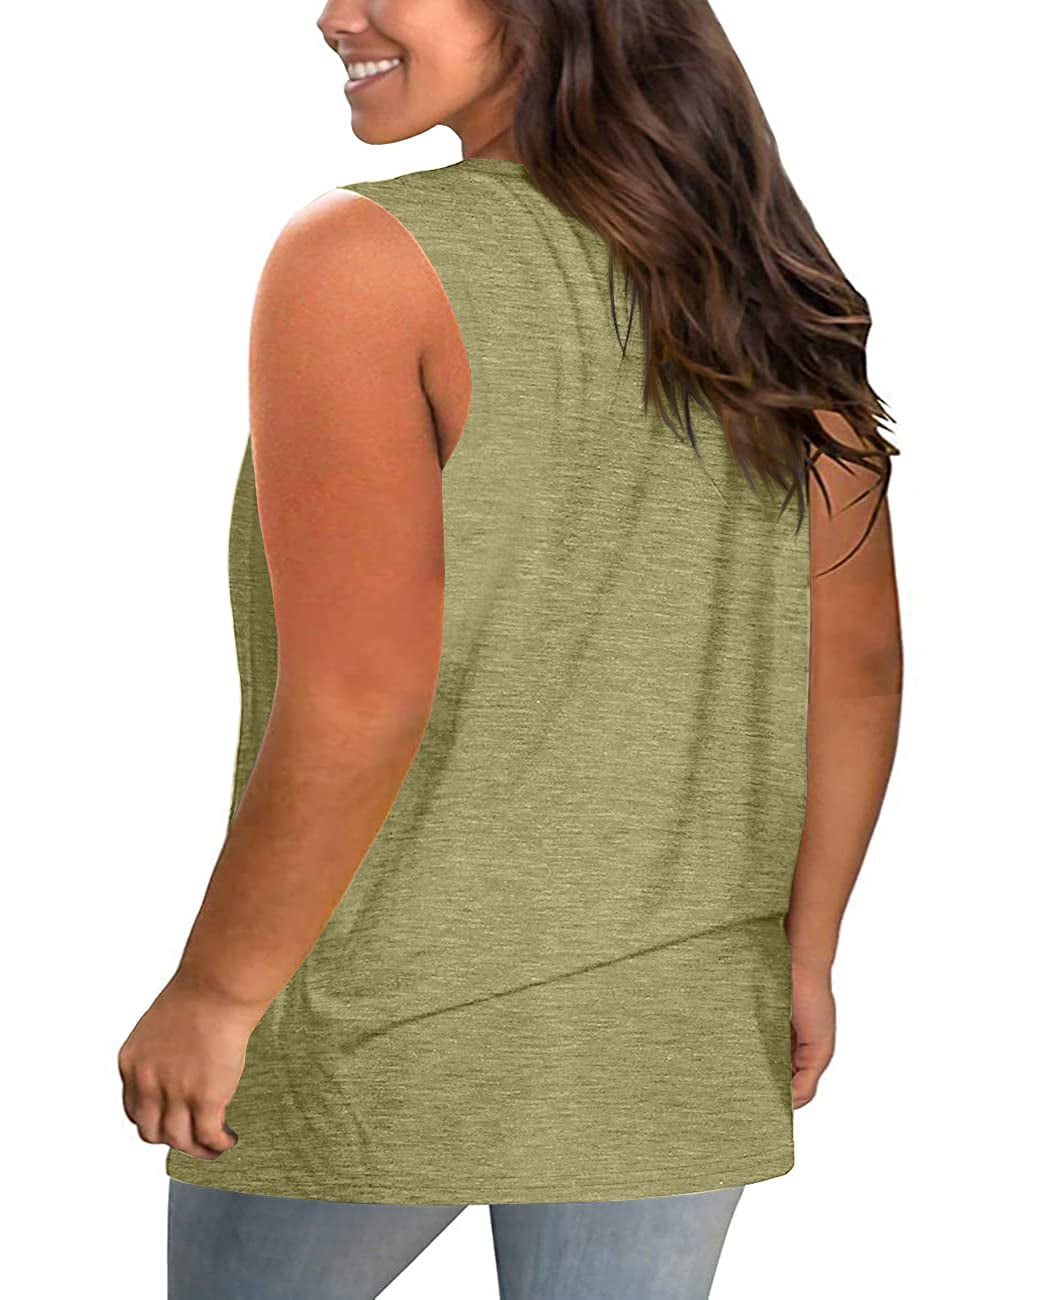 Sherrylily Women Plus Size Tank Tops Summer Sleeveless Criss Cross Casual  Loose Shirt 